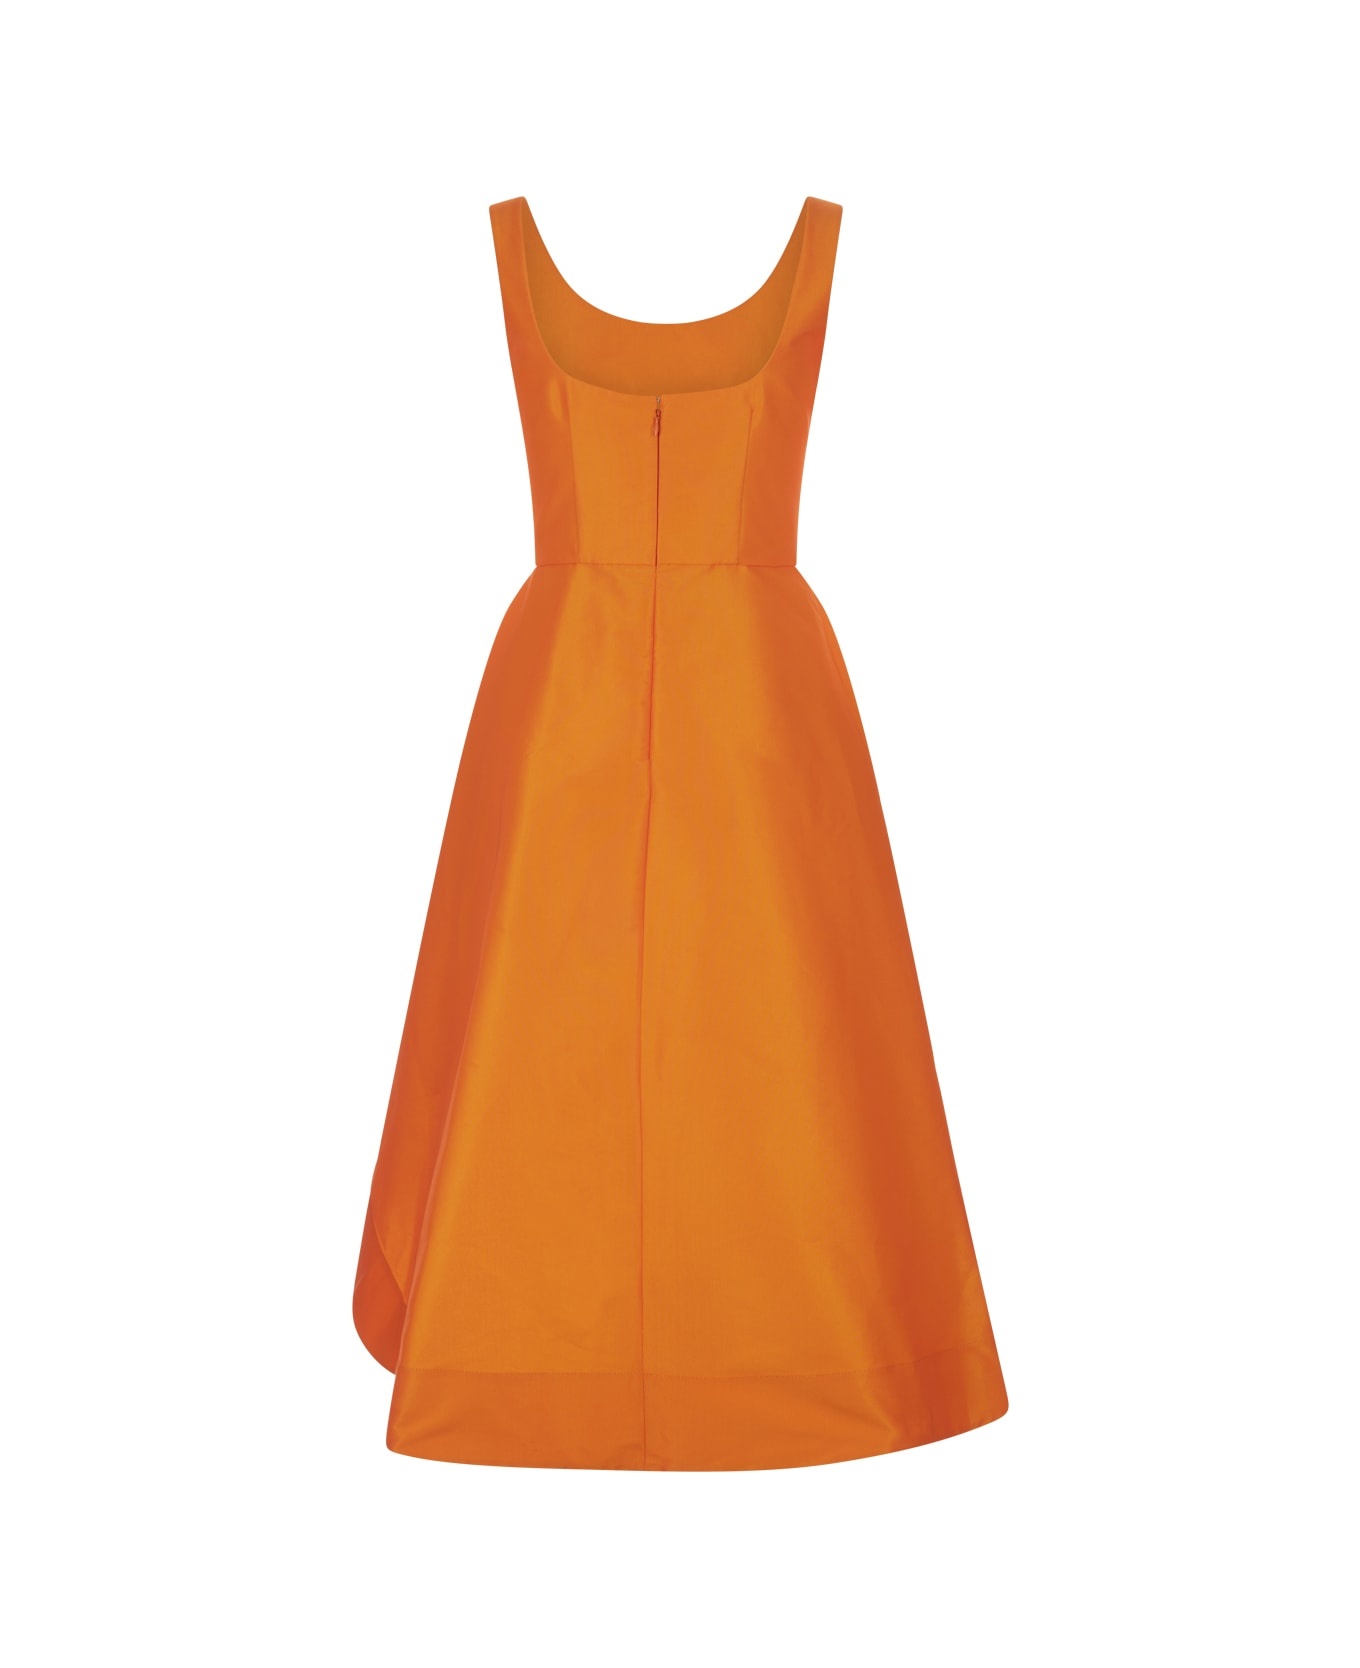 Asymmetrical And Draped Dress In Orange - 2